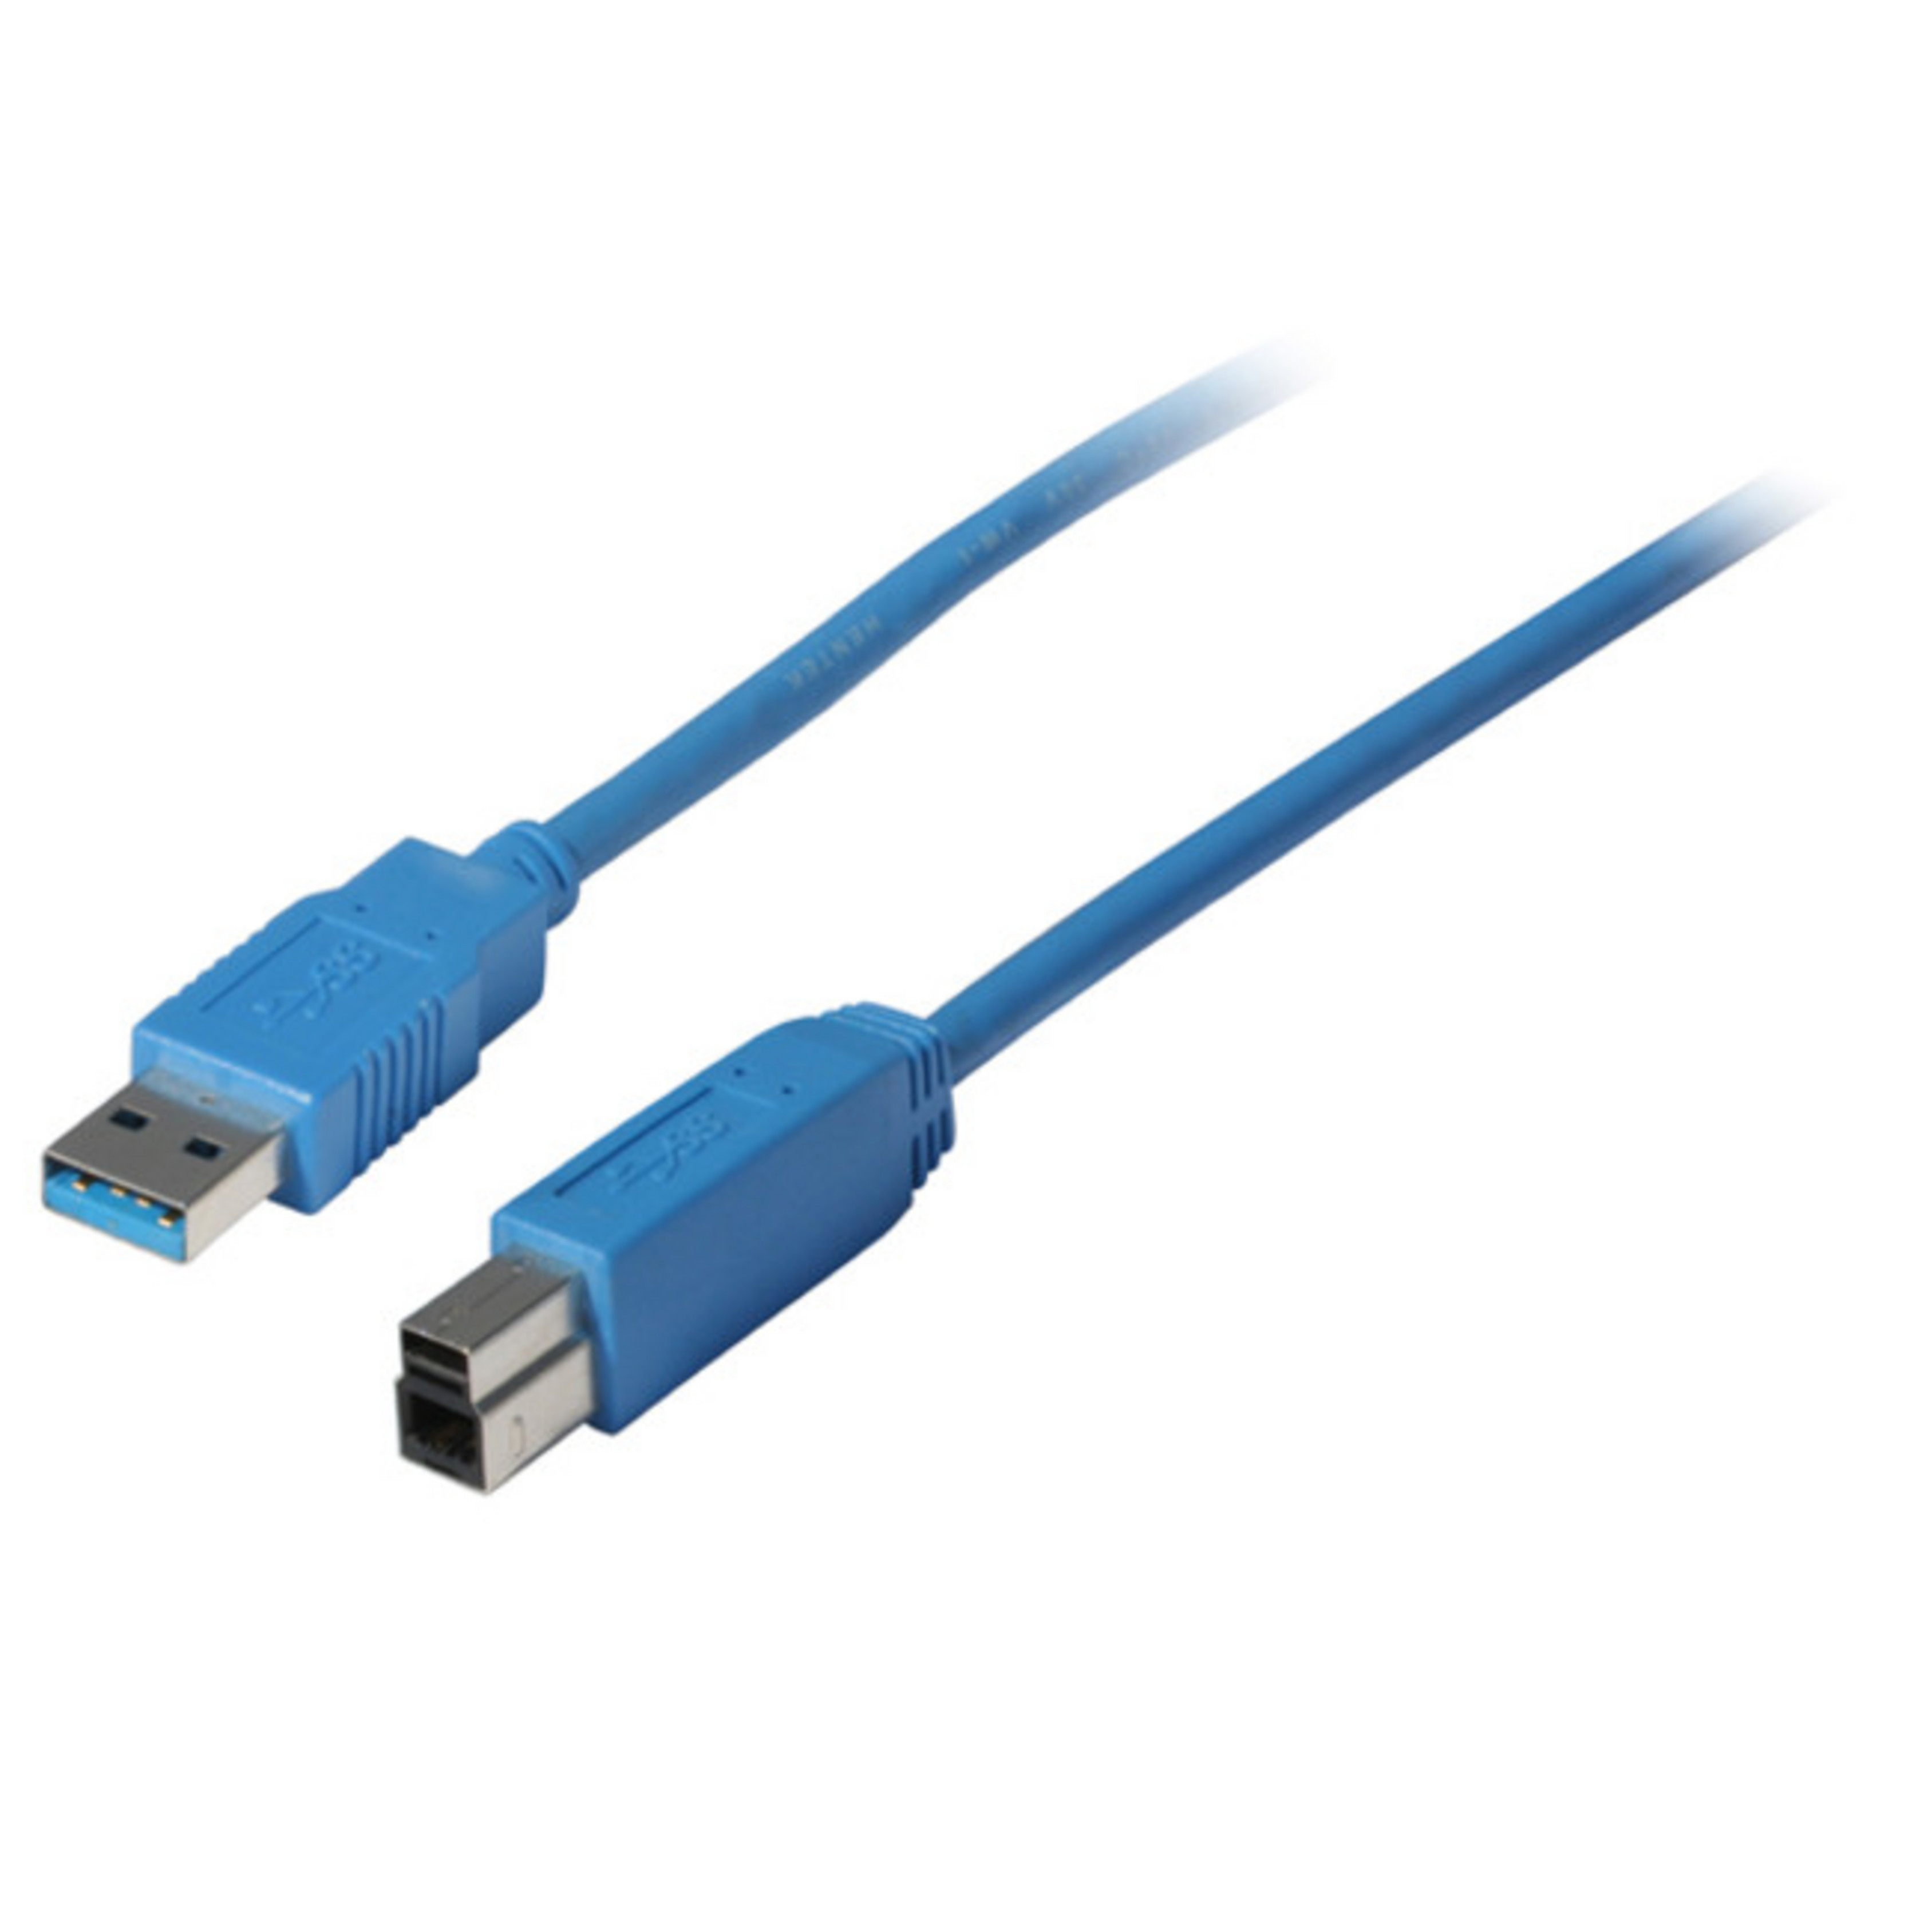 S/CONN MAXIMUM CONNECTIVITY Kabel USB / blau 3.0 1m USB Kabel B USB Stecker Stecker A